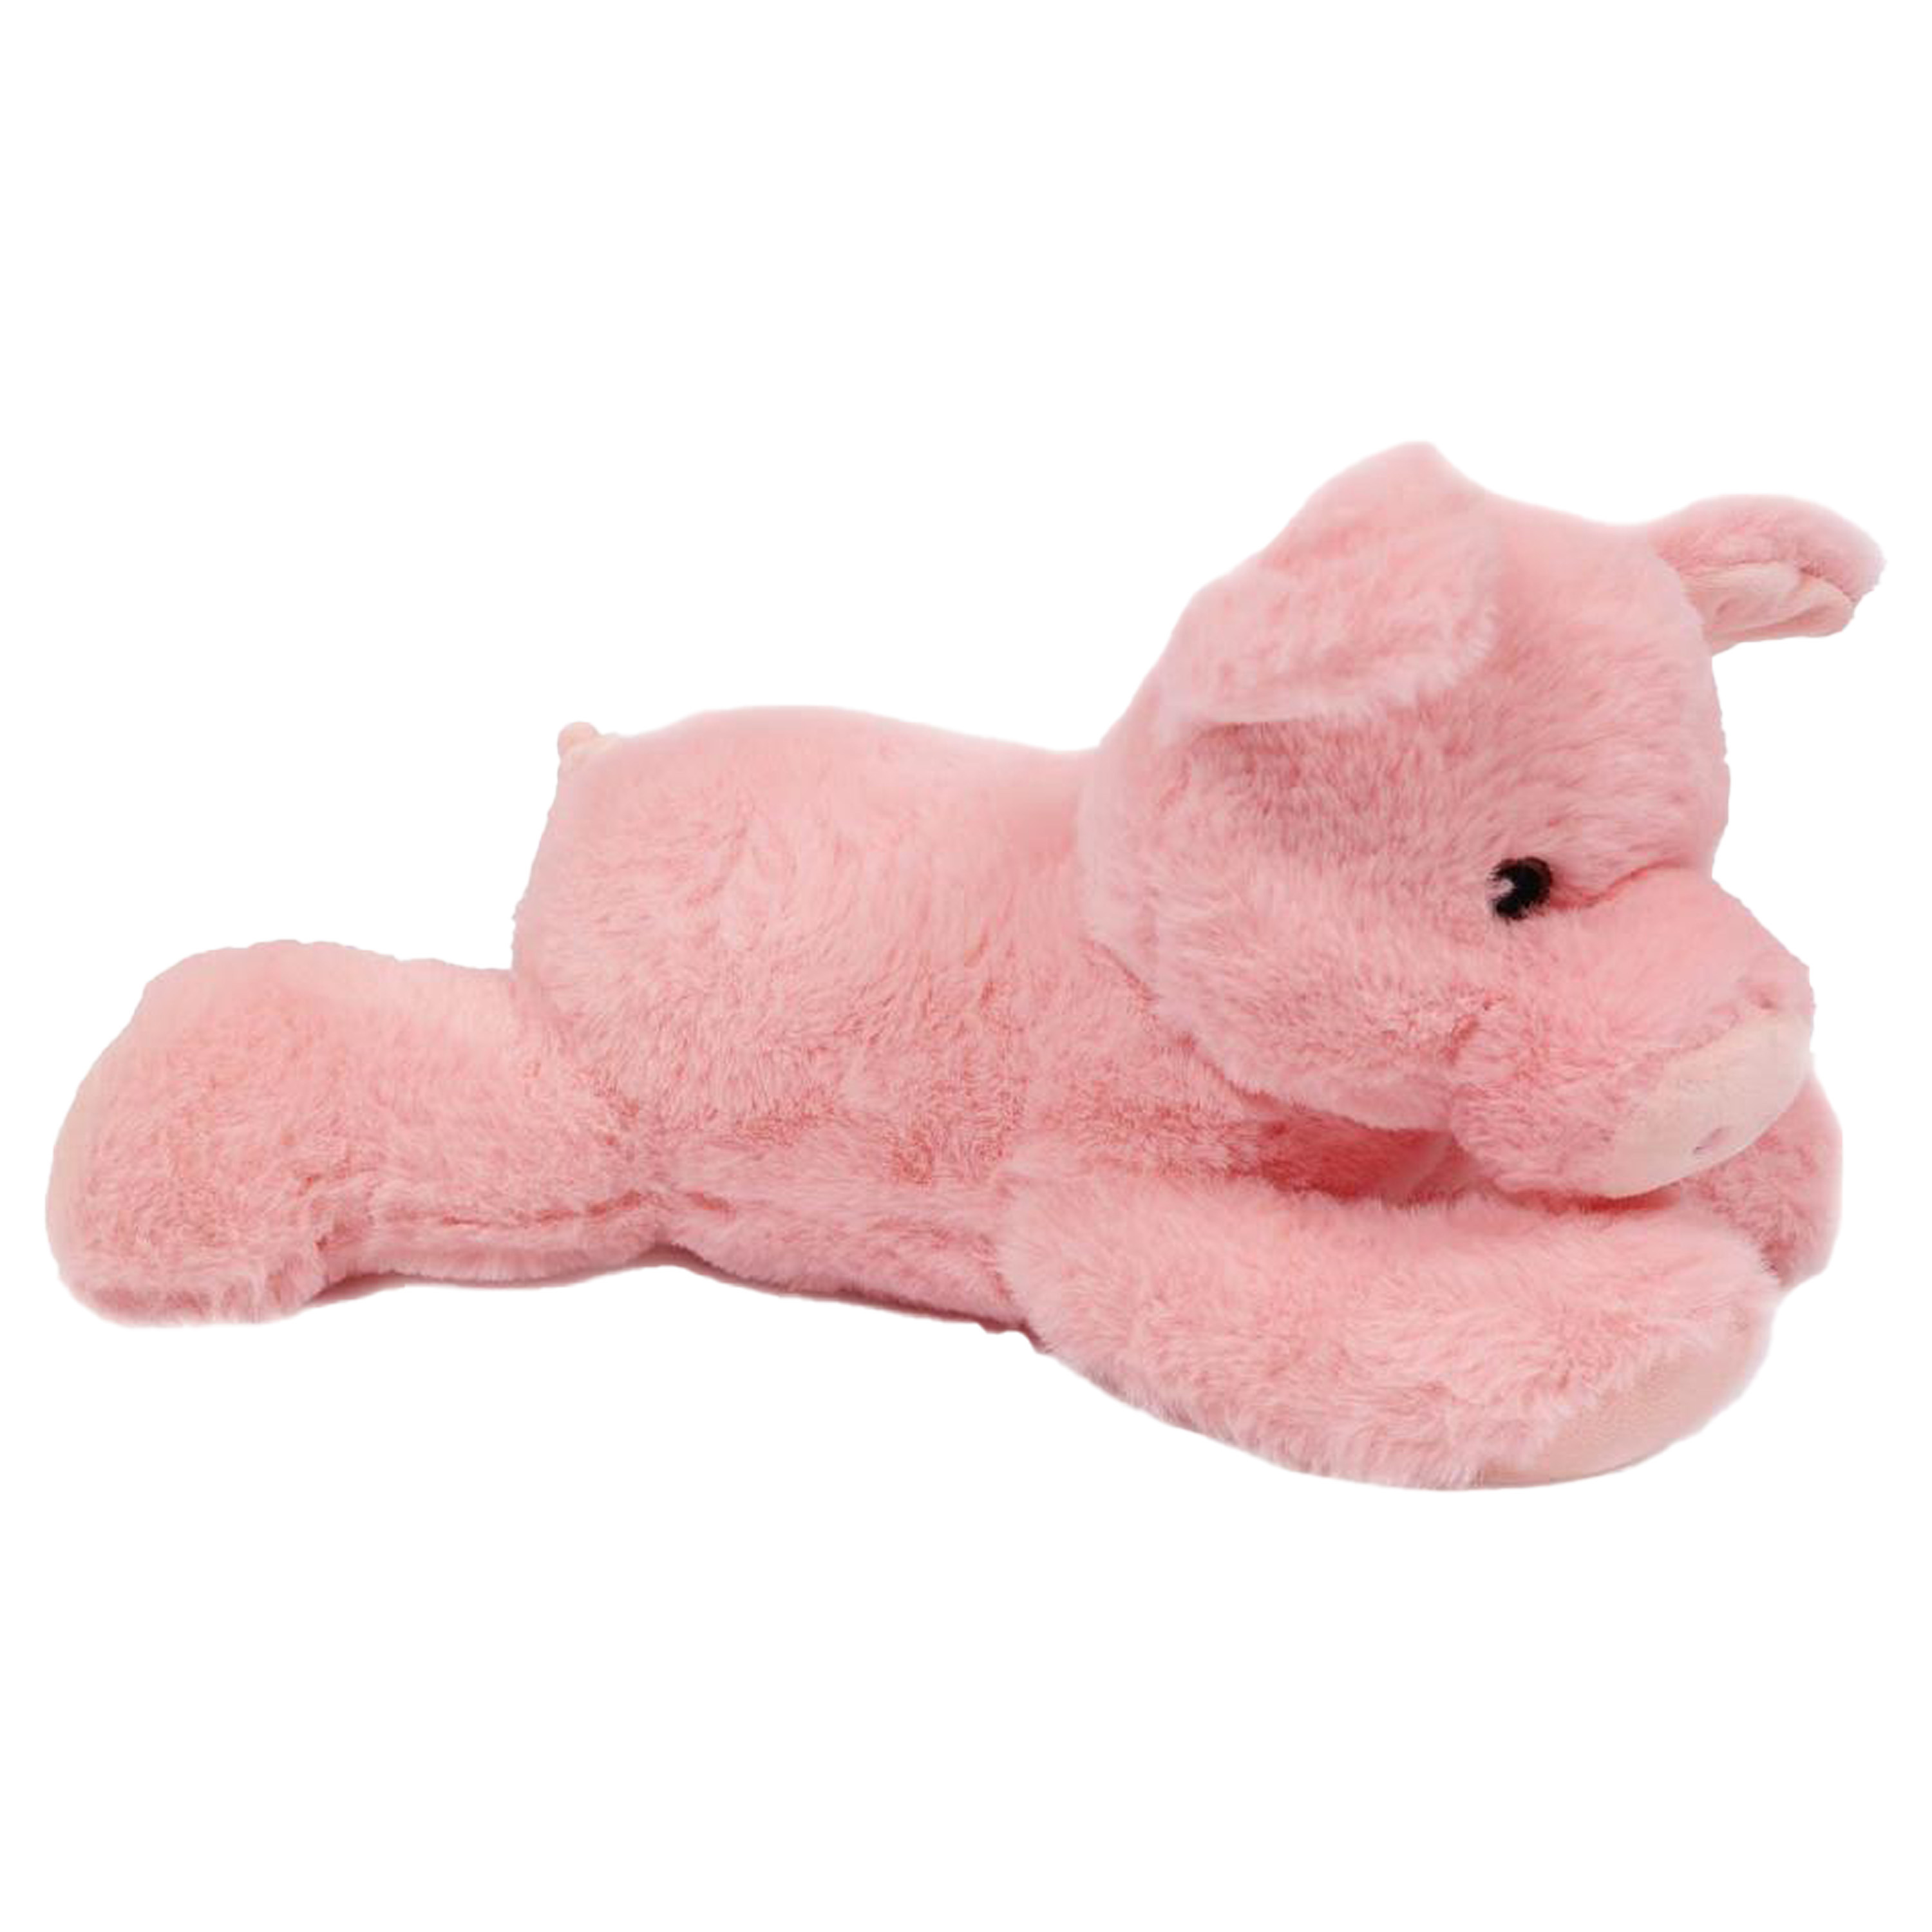 Pia Toys Knuffeldier Varken-biggetje roze pluche stof premium kwaliteit knuffels 30 cm